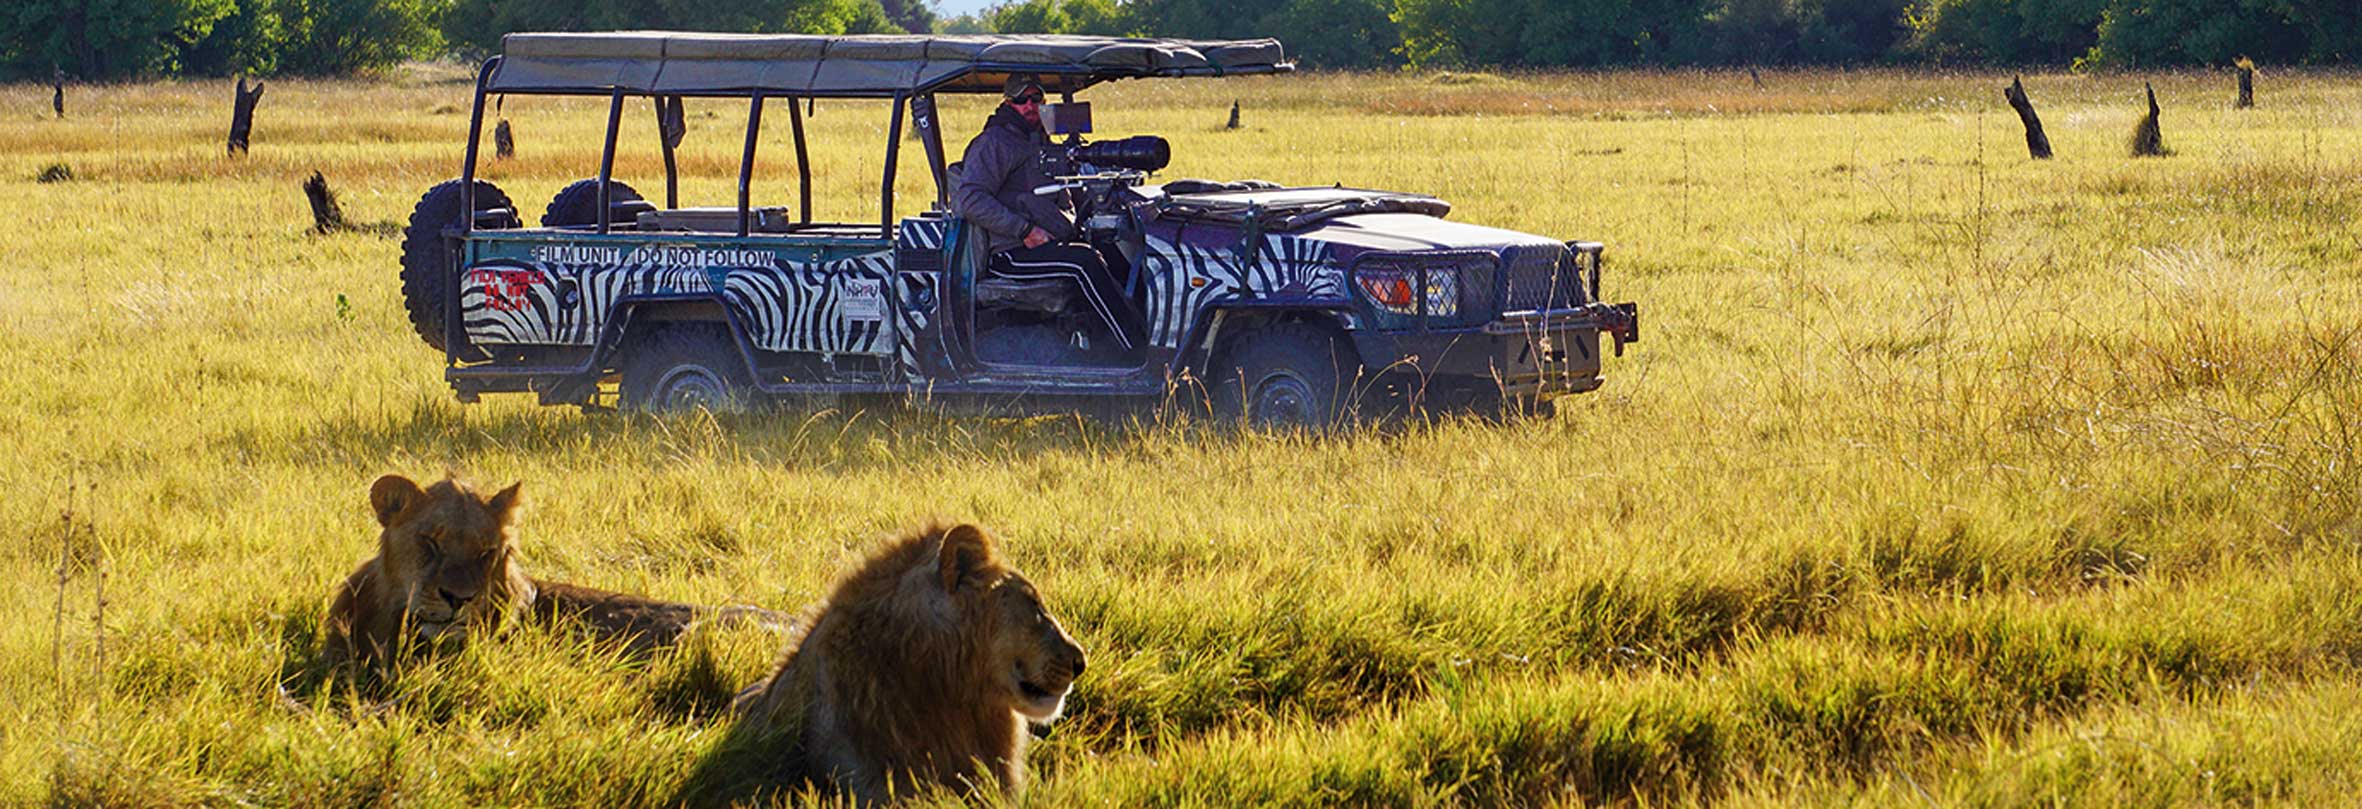 Botswana-Safari im 4x4-Fahrzeug